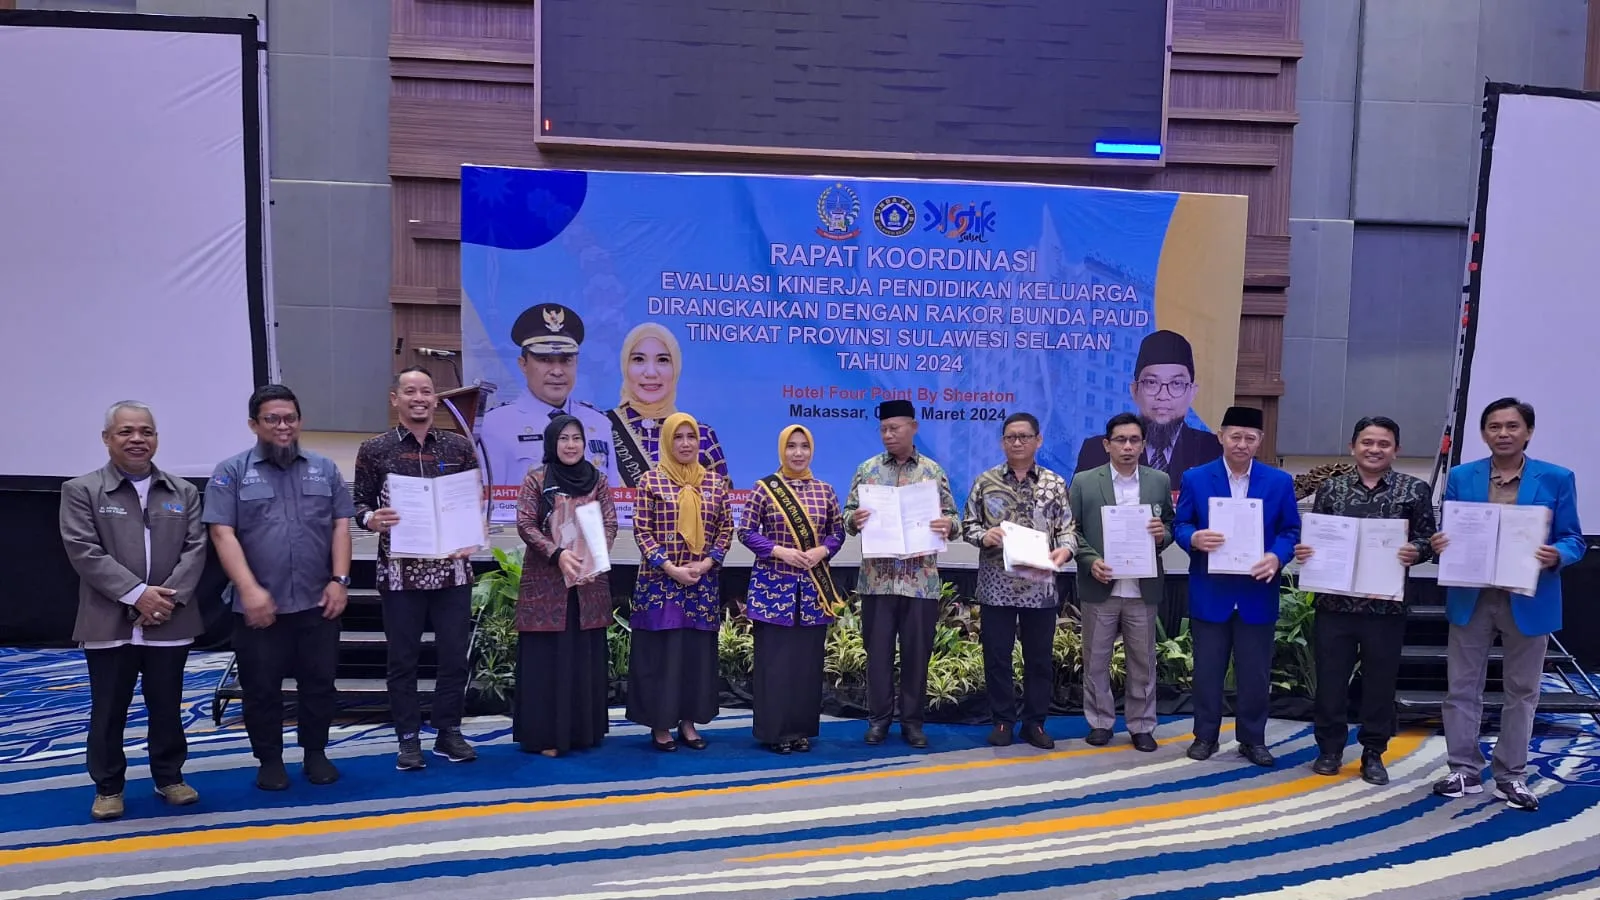 Universitas Islam Makassar (UIM) Al-Gazali bersama Bunda PAUD Sulsel menandatangani Memorandum of Understanding (MoU) yang berlangsung di Hotel Four Point by Sheraton